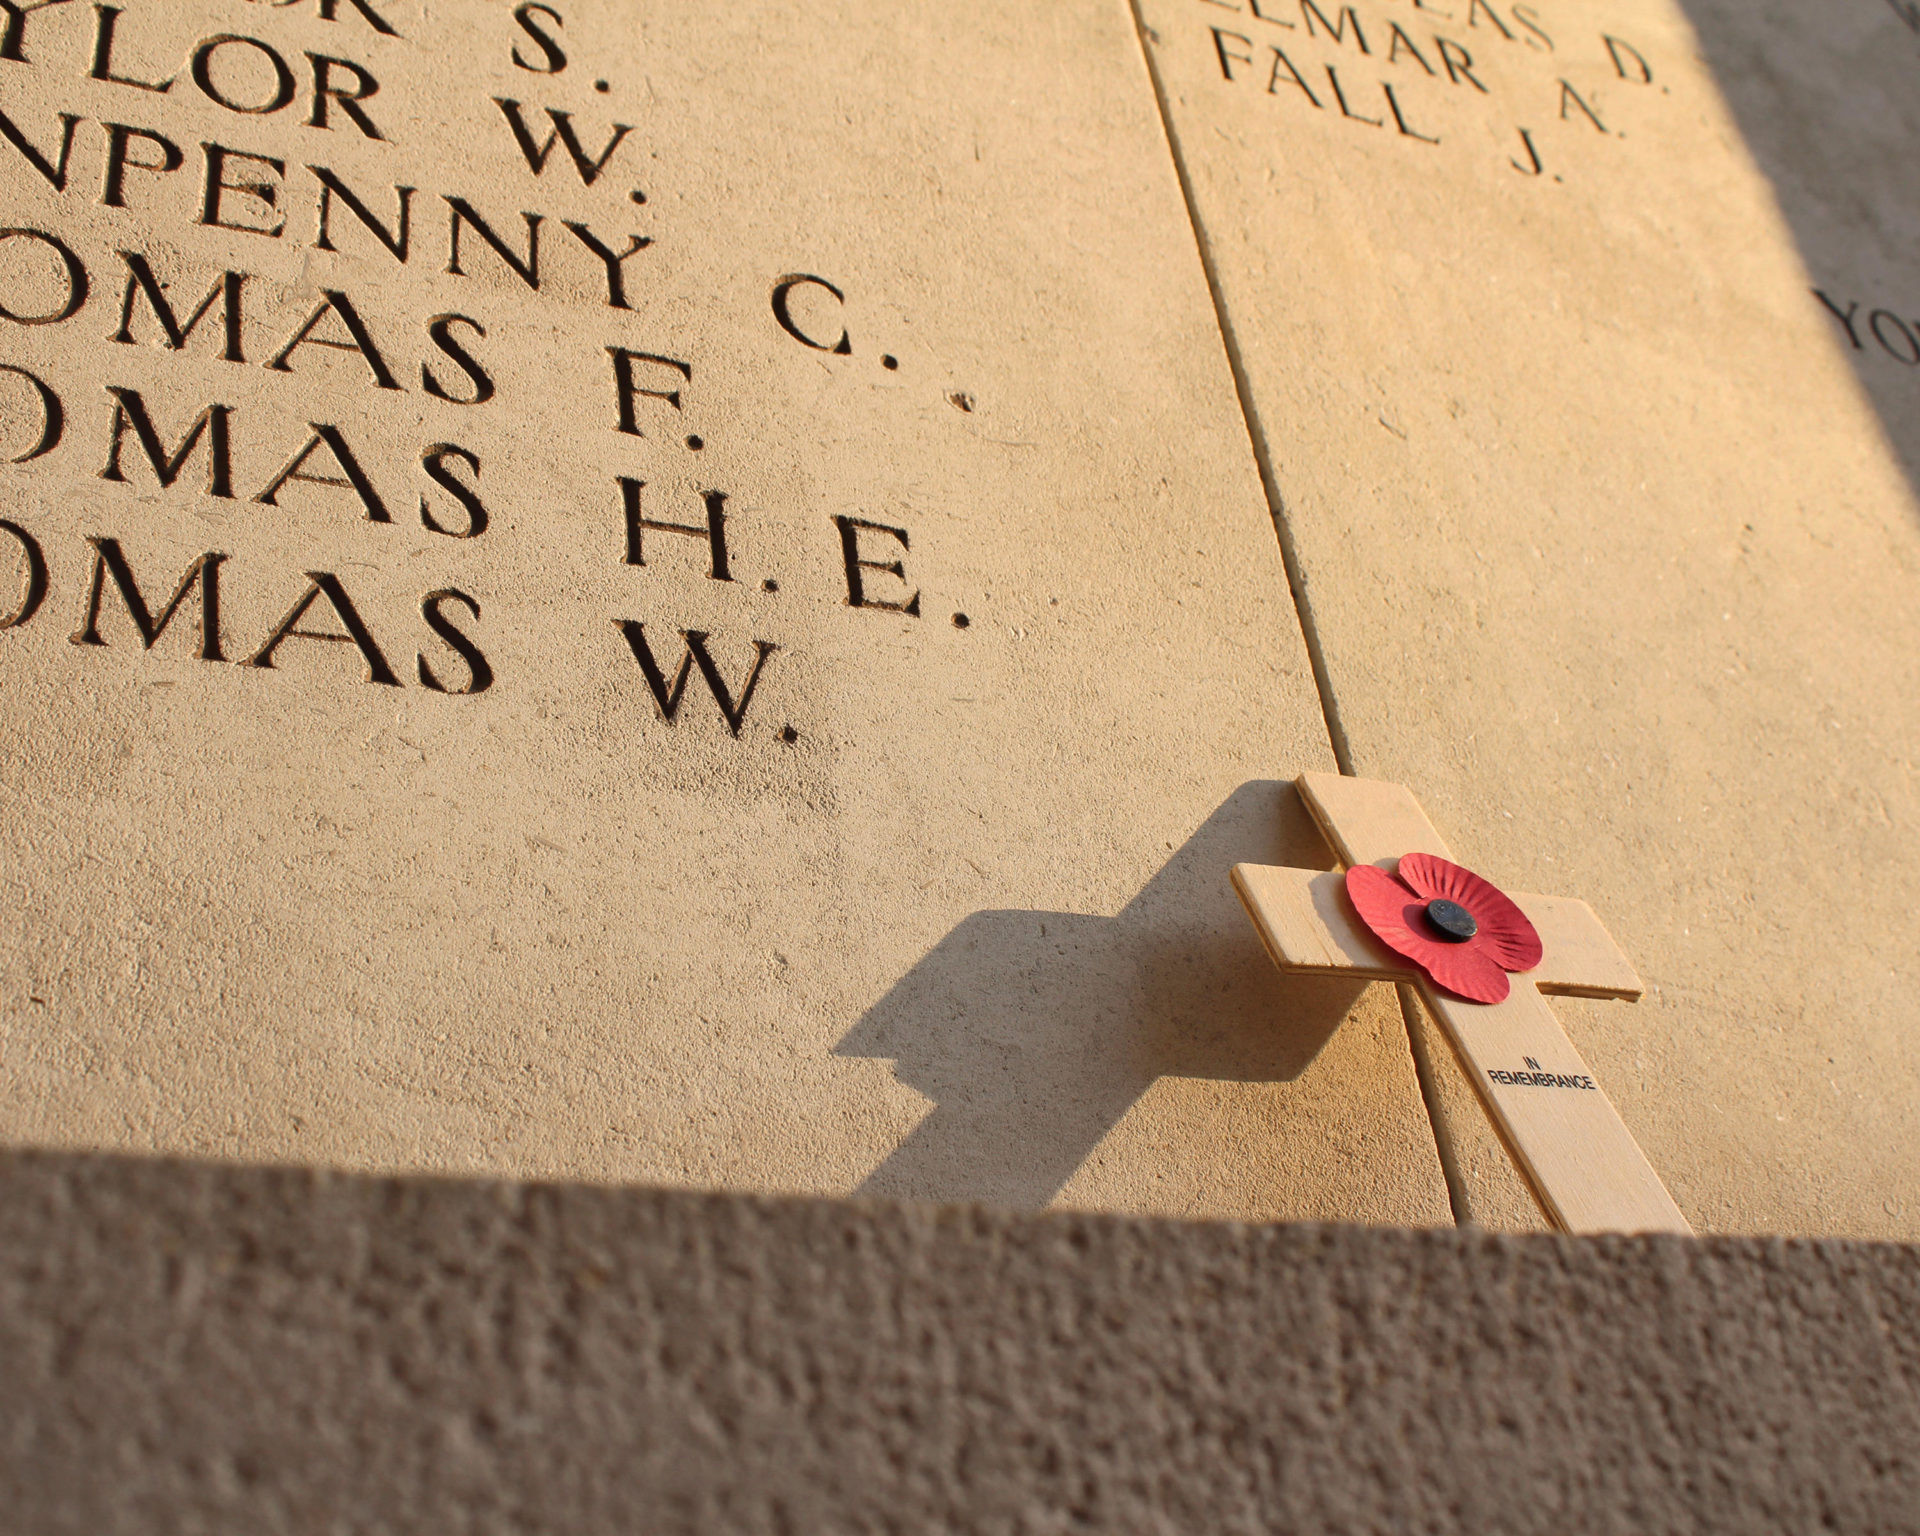 A poppy memorial cross left poignantly at the Menin Gate in Ypres, 19-04-2017.